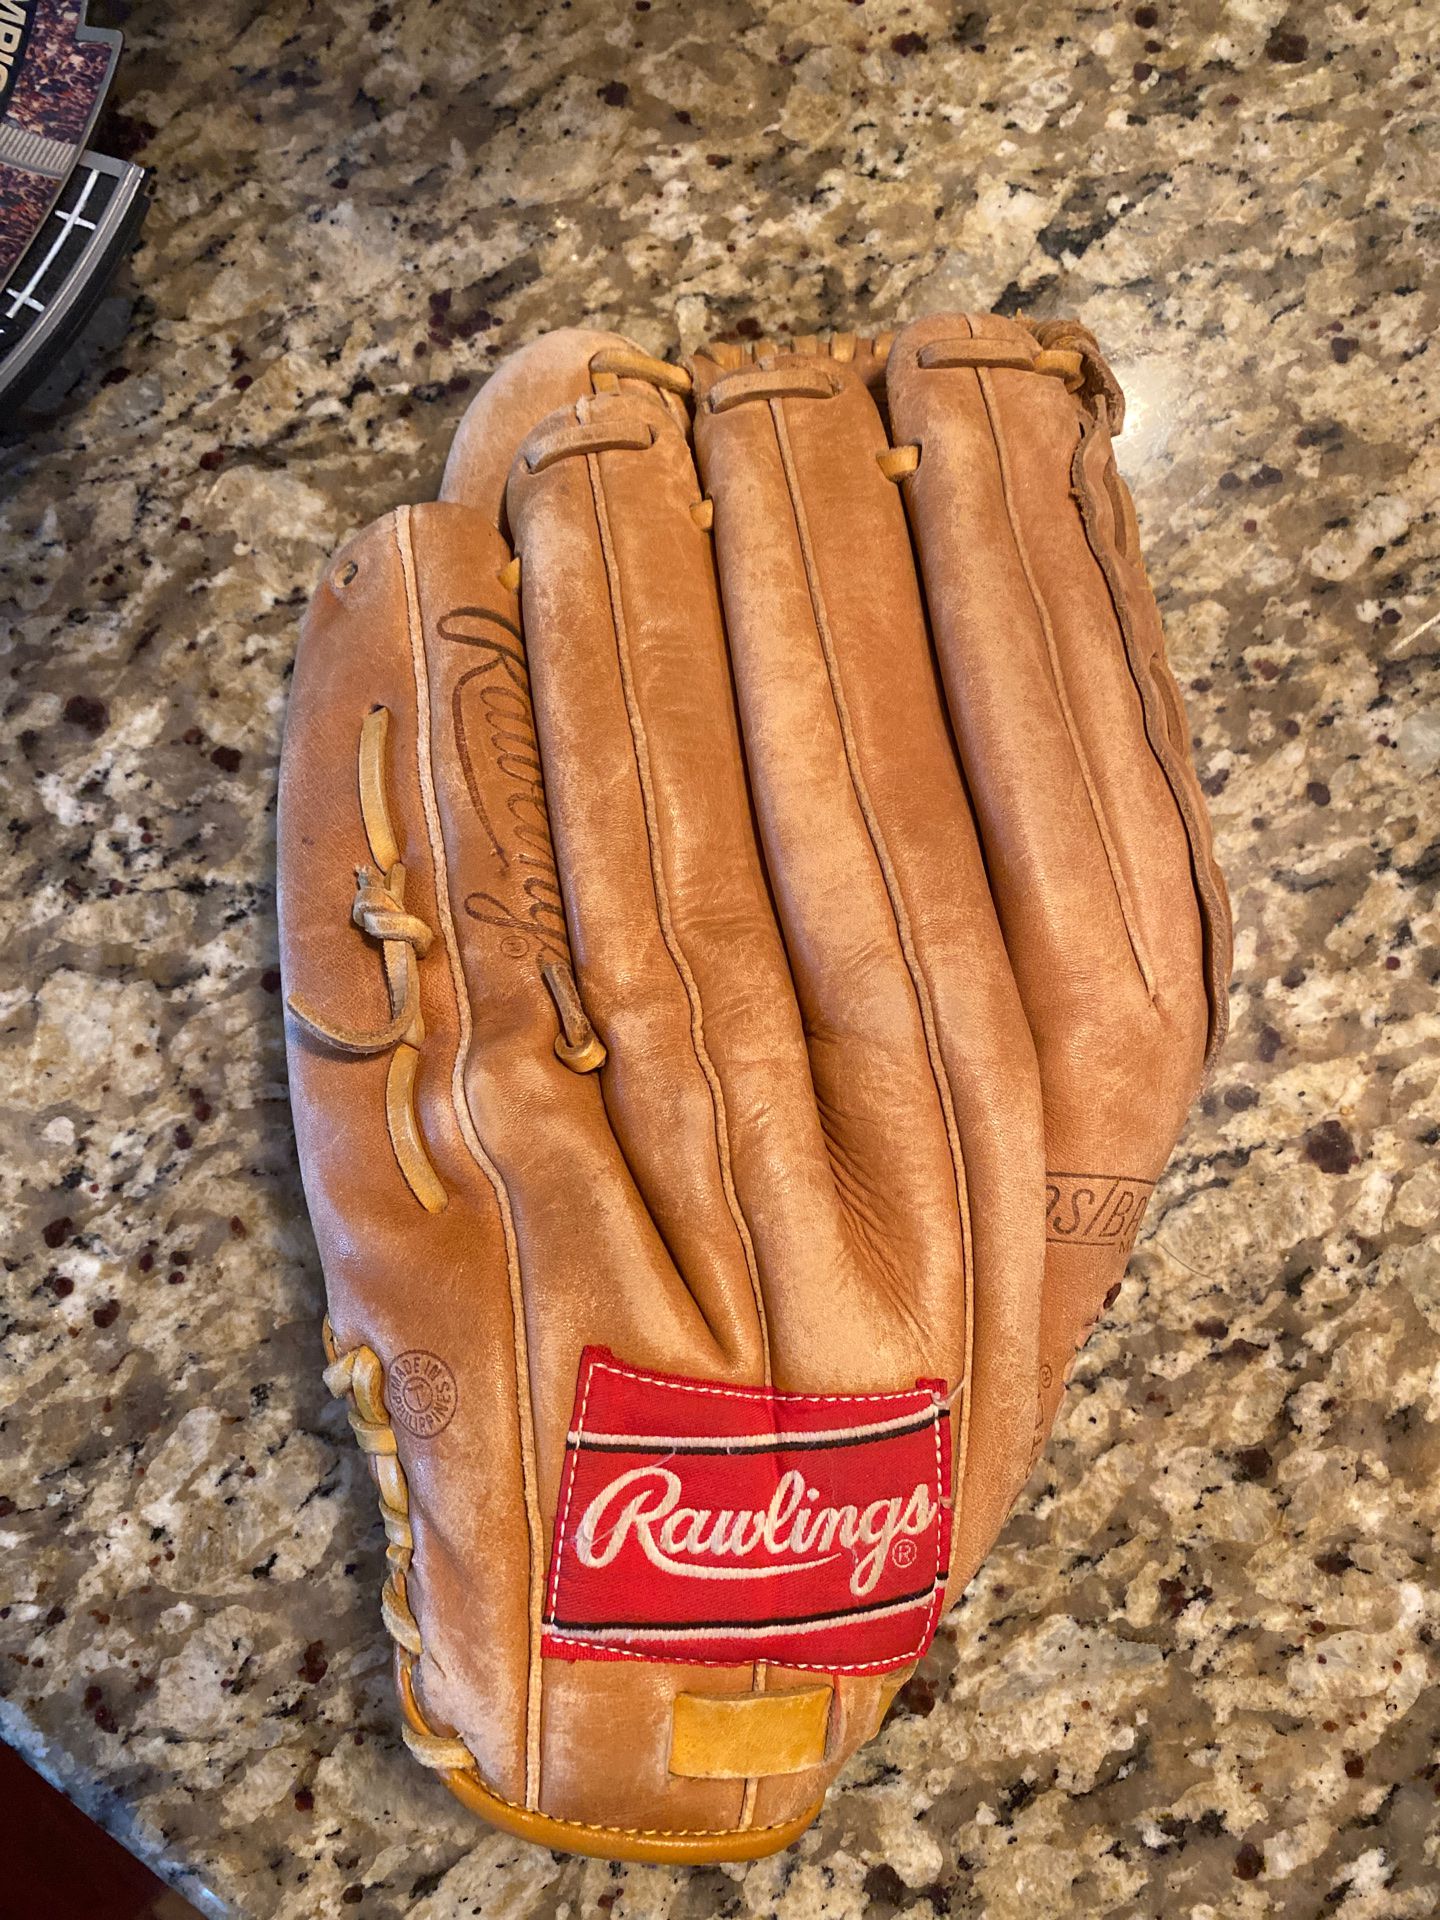 Rawlings baseball/softball glove